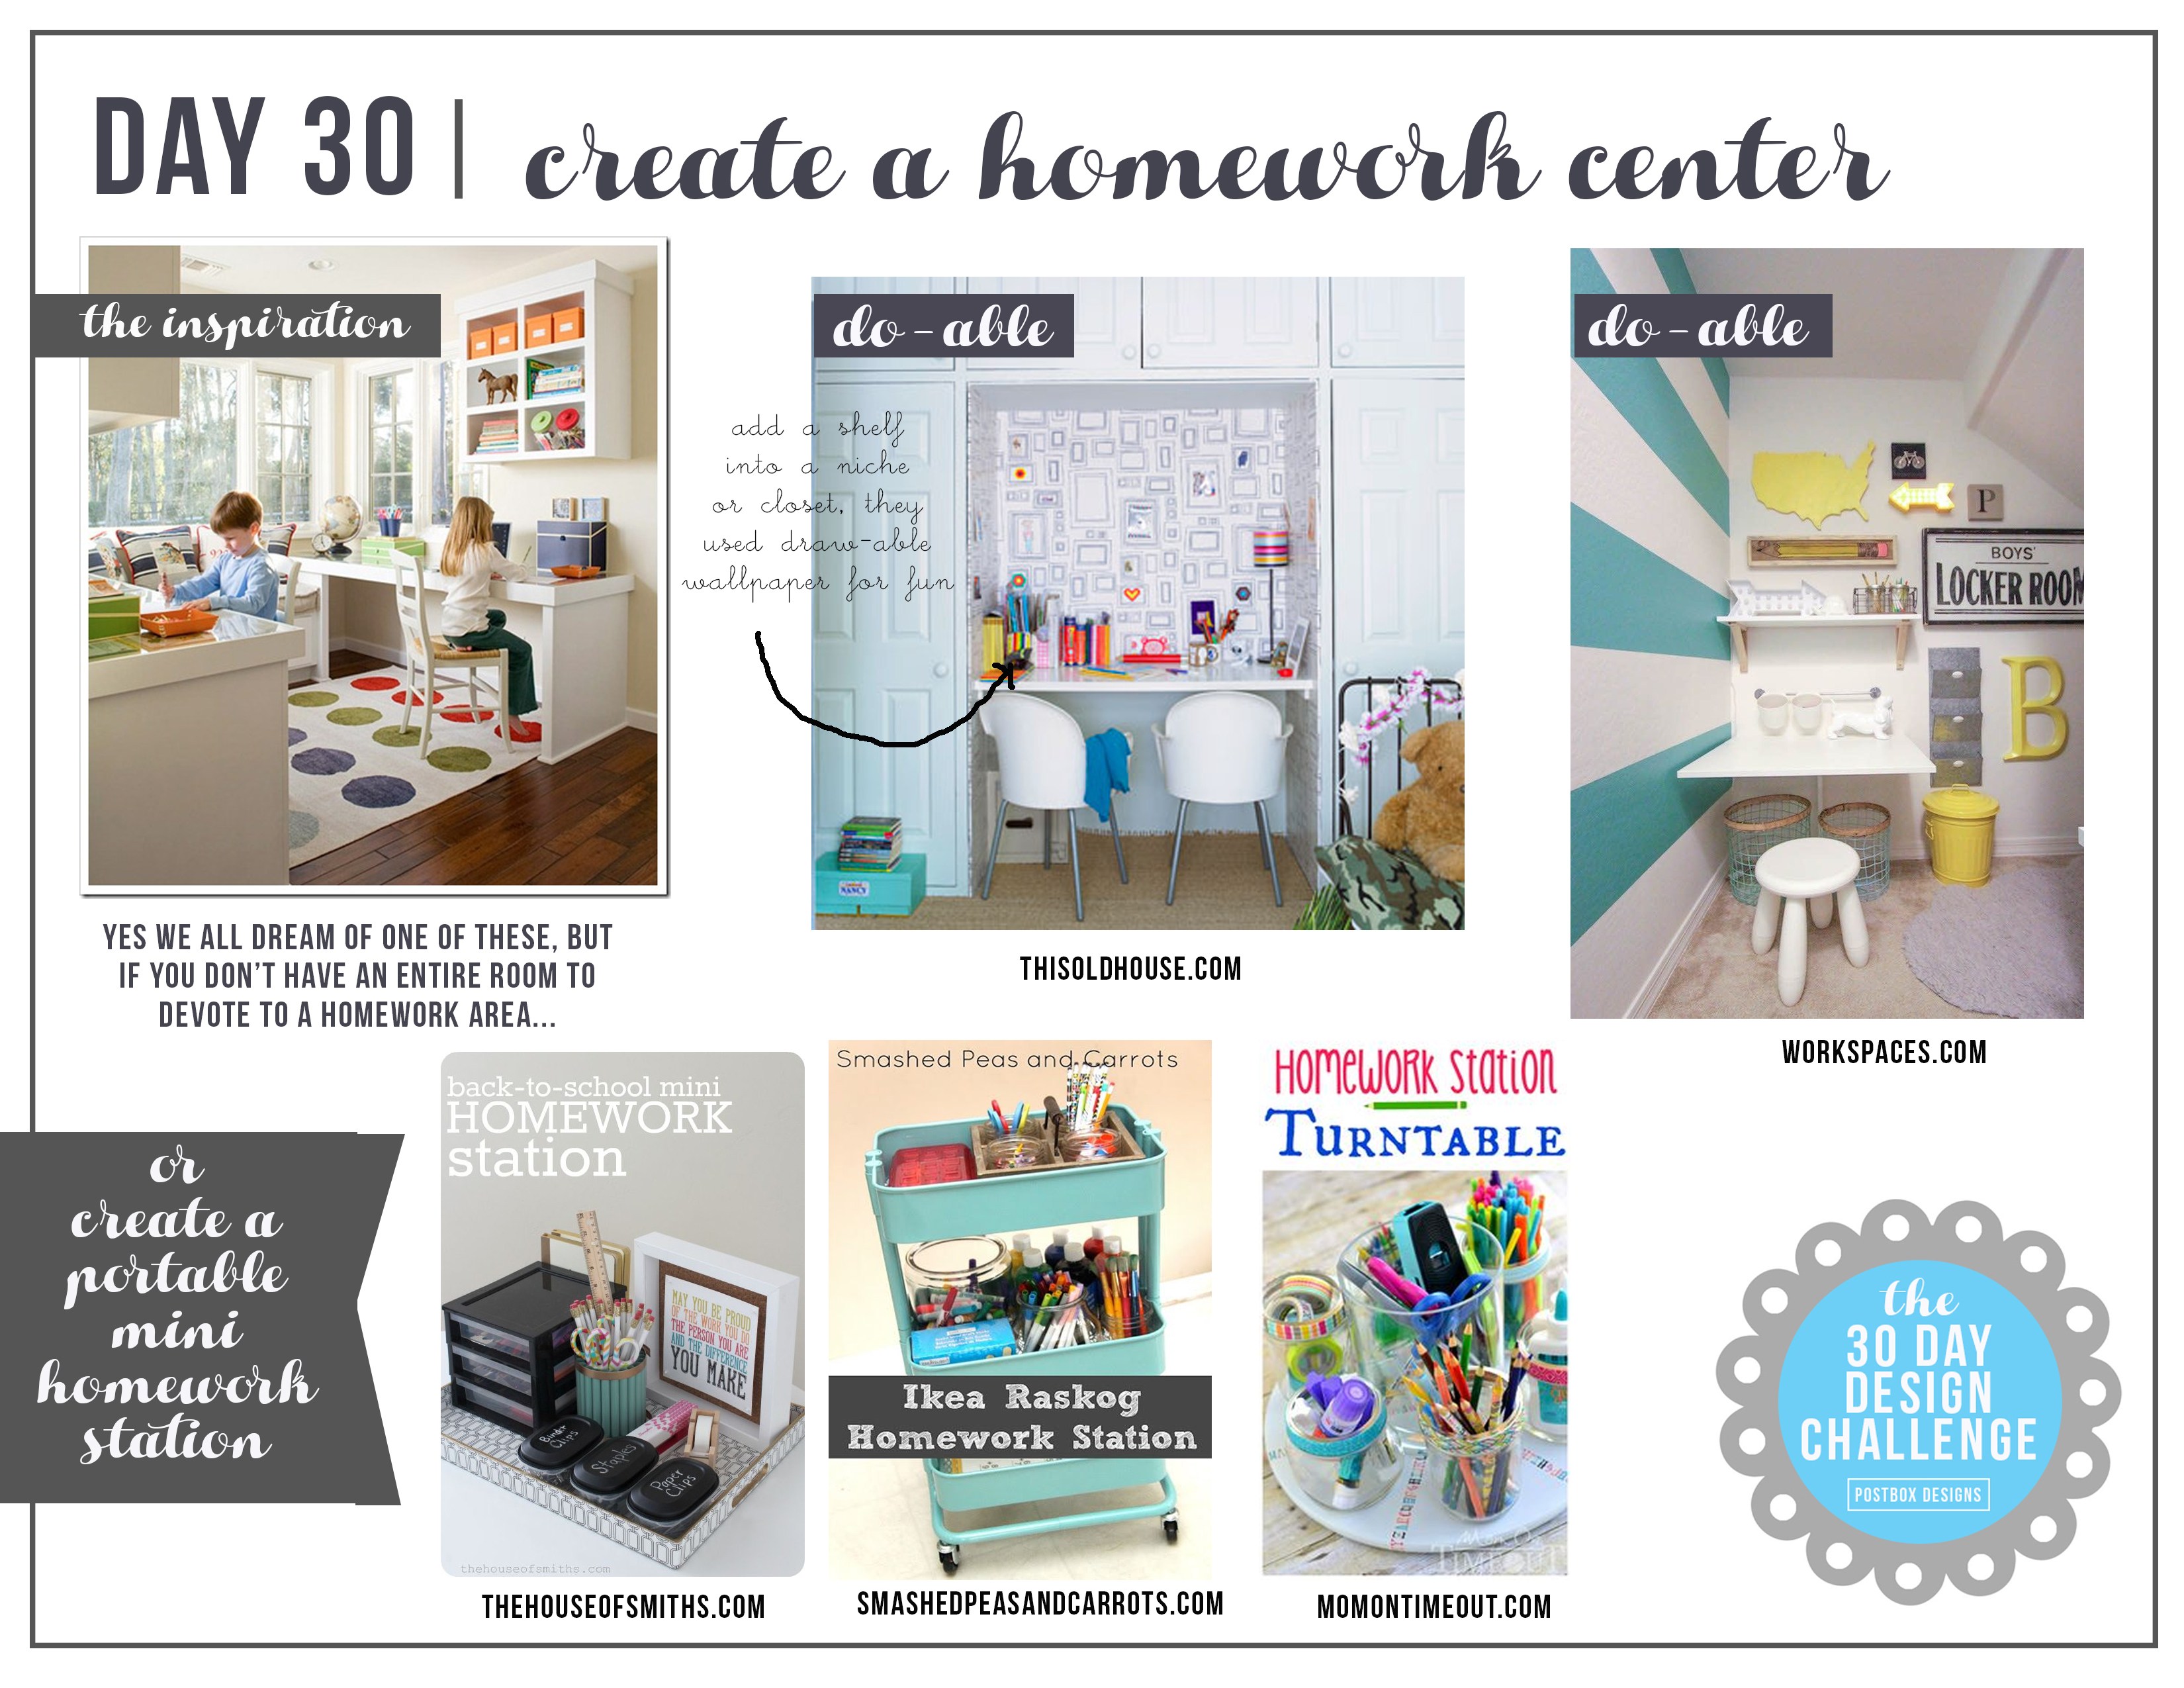 Day 30 Mini Homework Center - Online Advertising , HD Wallpaper & Backgrounds